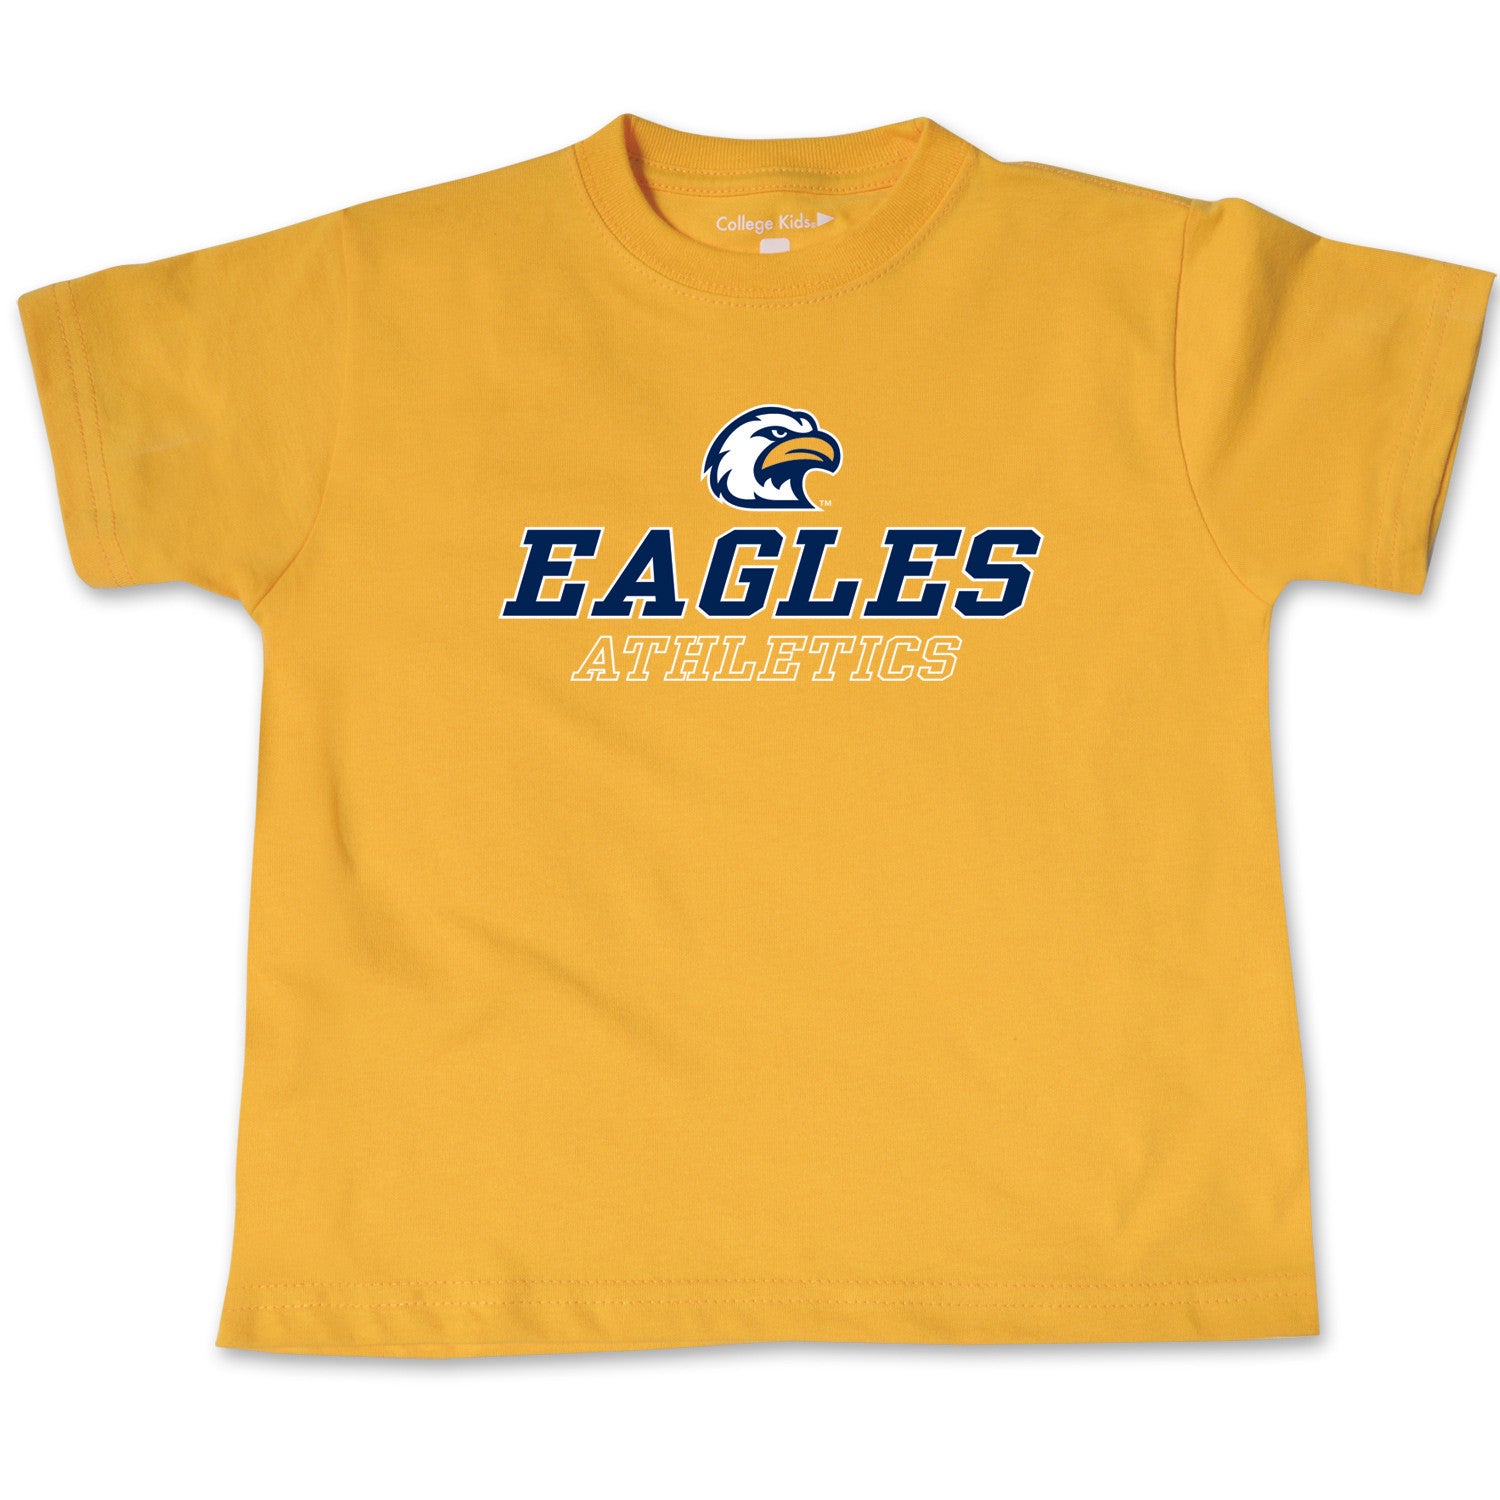 Liberty North Eagles Athletics Gold Toddler T-Shirt